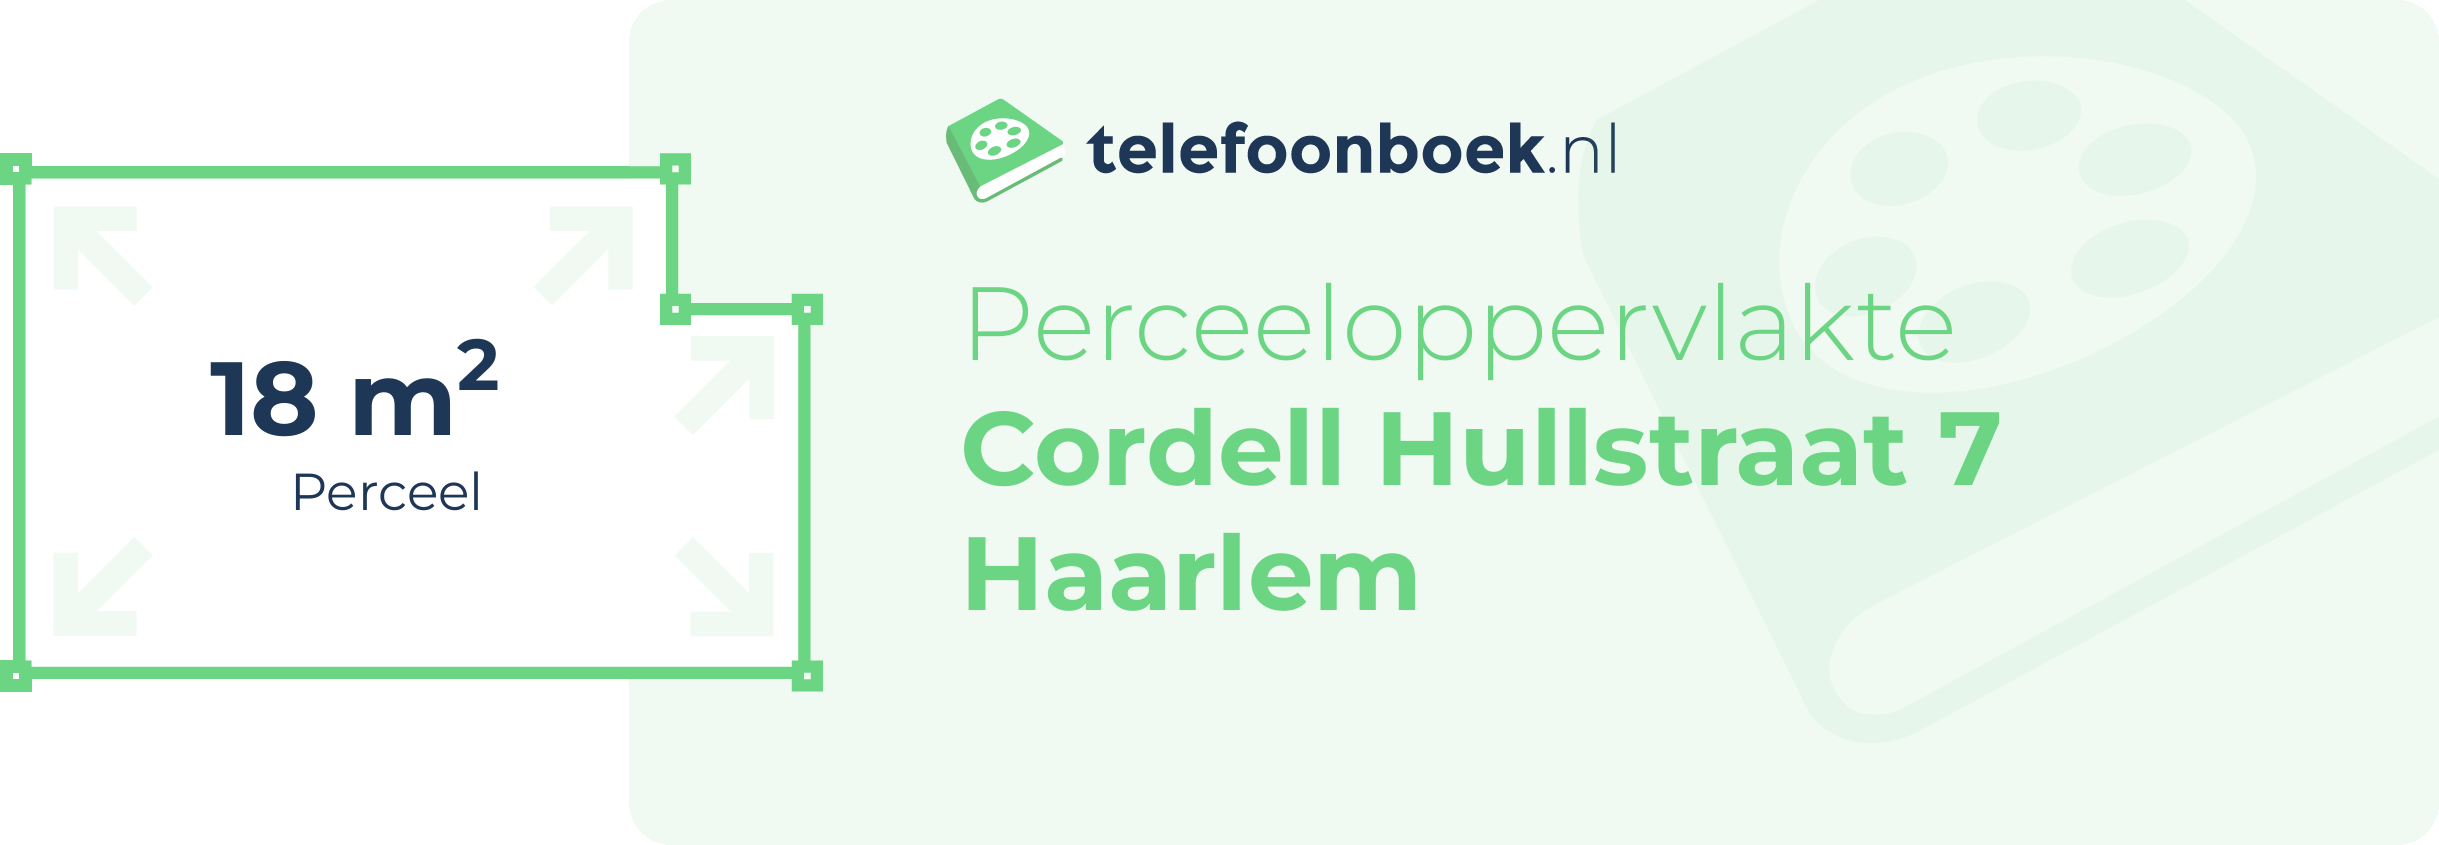 Perceeloppervlakte Cordell Hullstraat 7 Haarlem